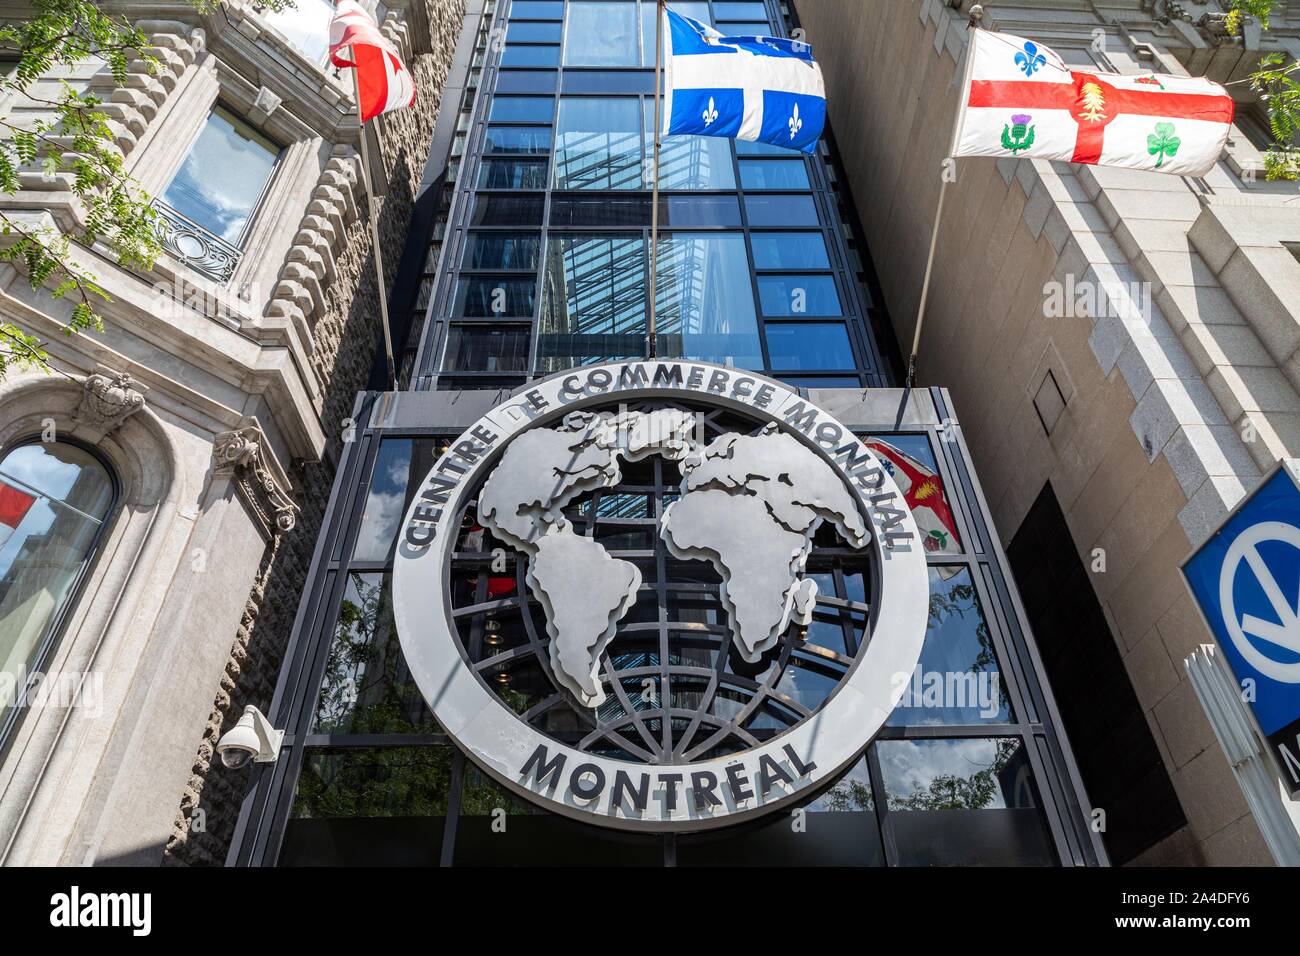 WORLD TRADE CENTER OF MONTREAL, MODERN SHOPPING CENTER, RUE DU SQUARE VICTORIA, MONTREAL, QUEBEC, CANADA Stock Photo